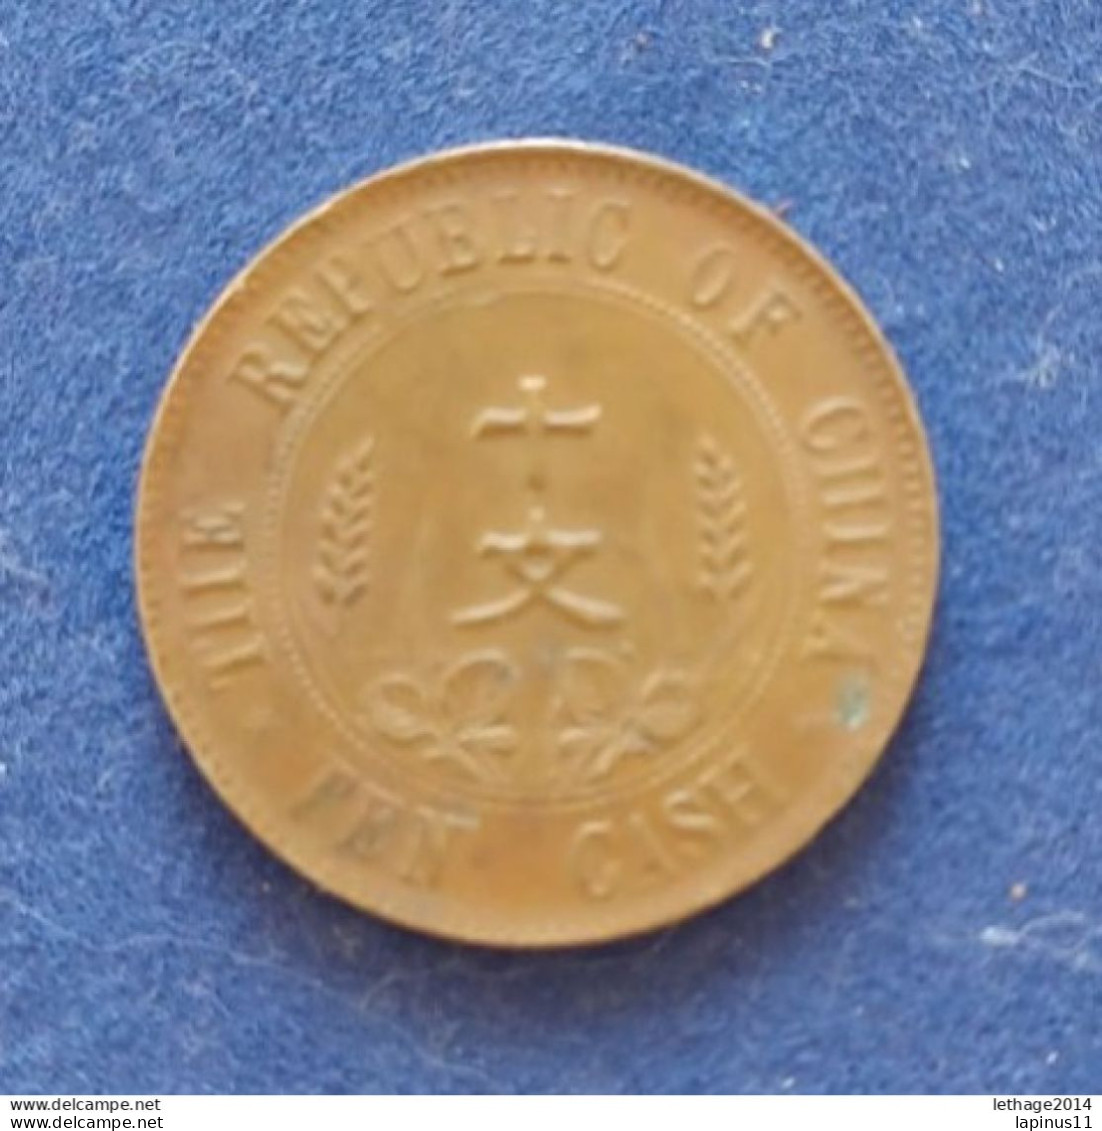 COIN 10 CASH CINA REPUBLIC OF CHINA 912 1948 - China